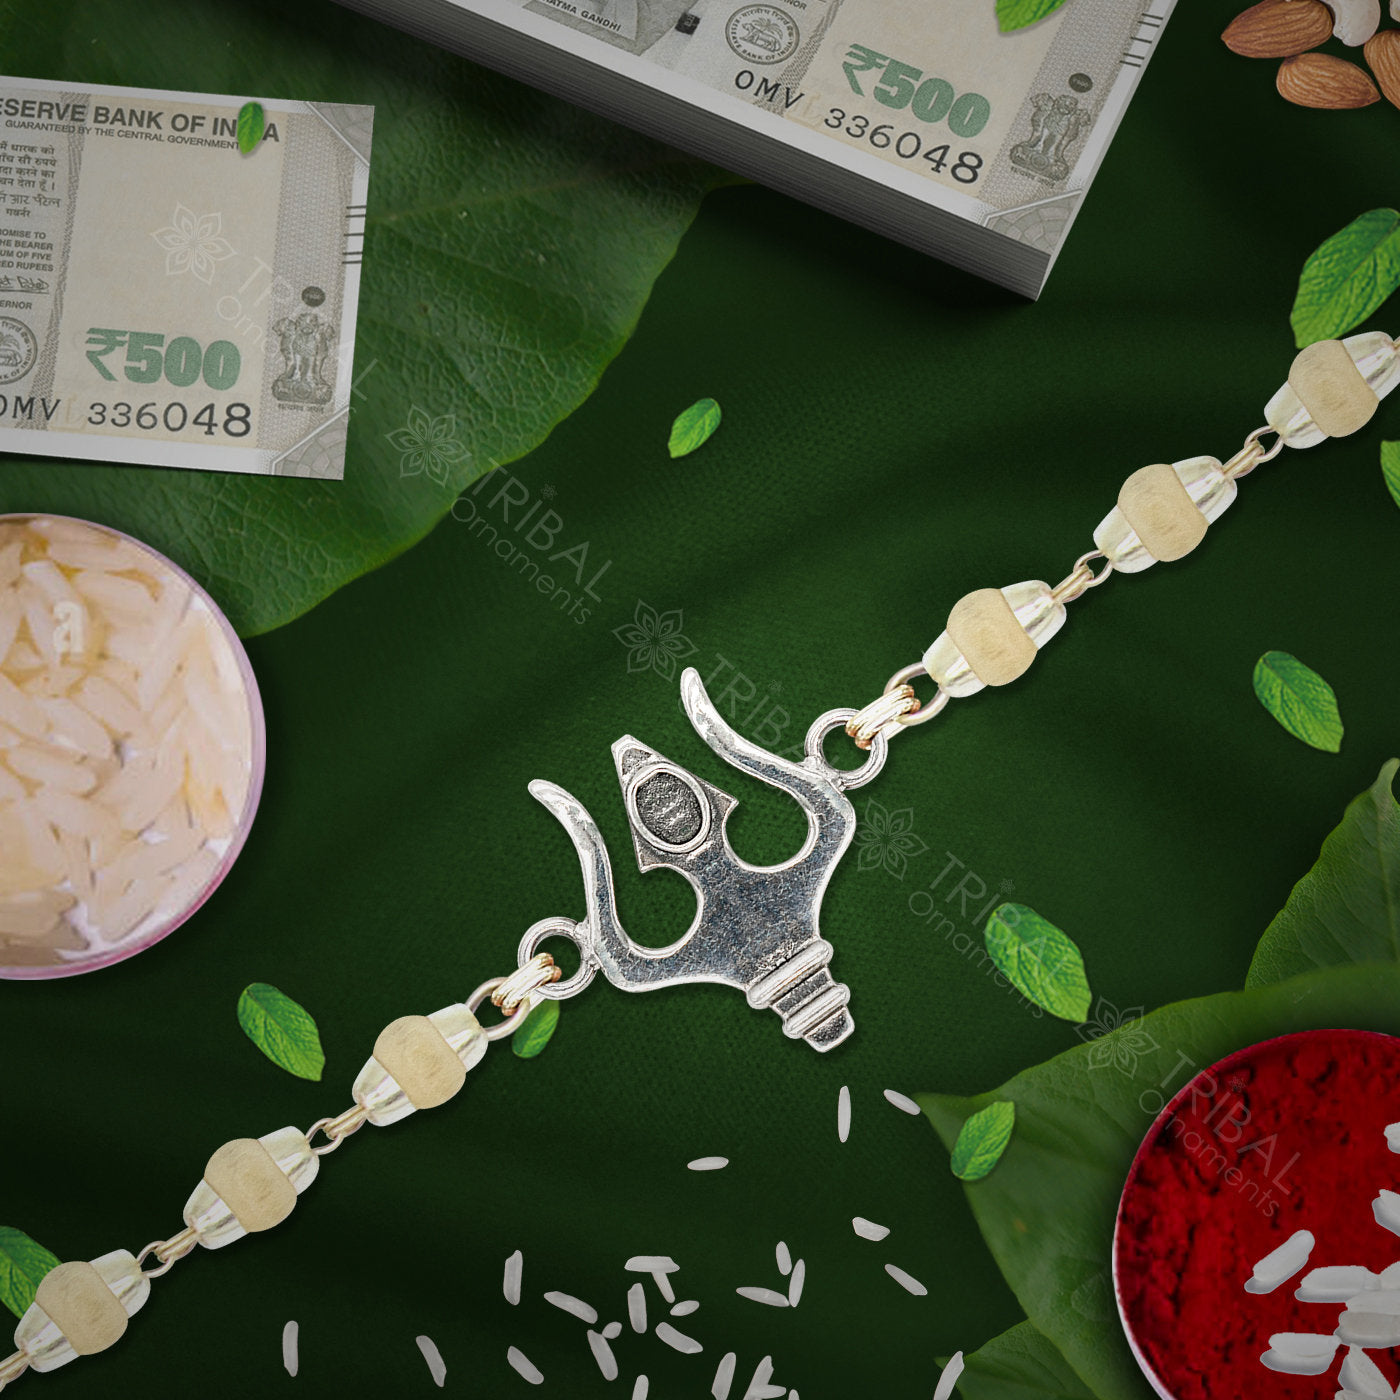 Amazing Lord shiva trident design 925 sterling silver Rakhi bracelet in rudraksh/black basil/white basil and silver beaded chain rk282 - TRIBAL ORNAMENTS